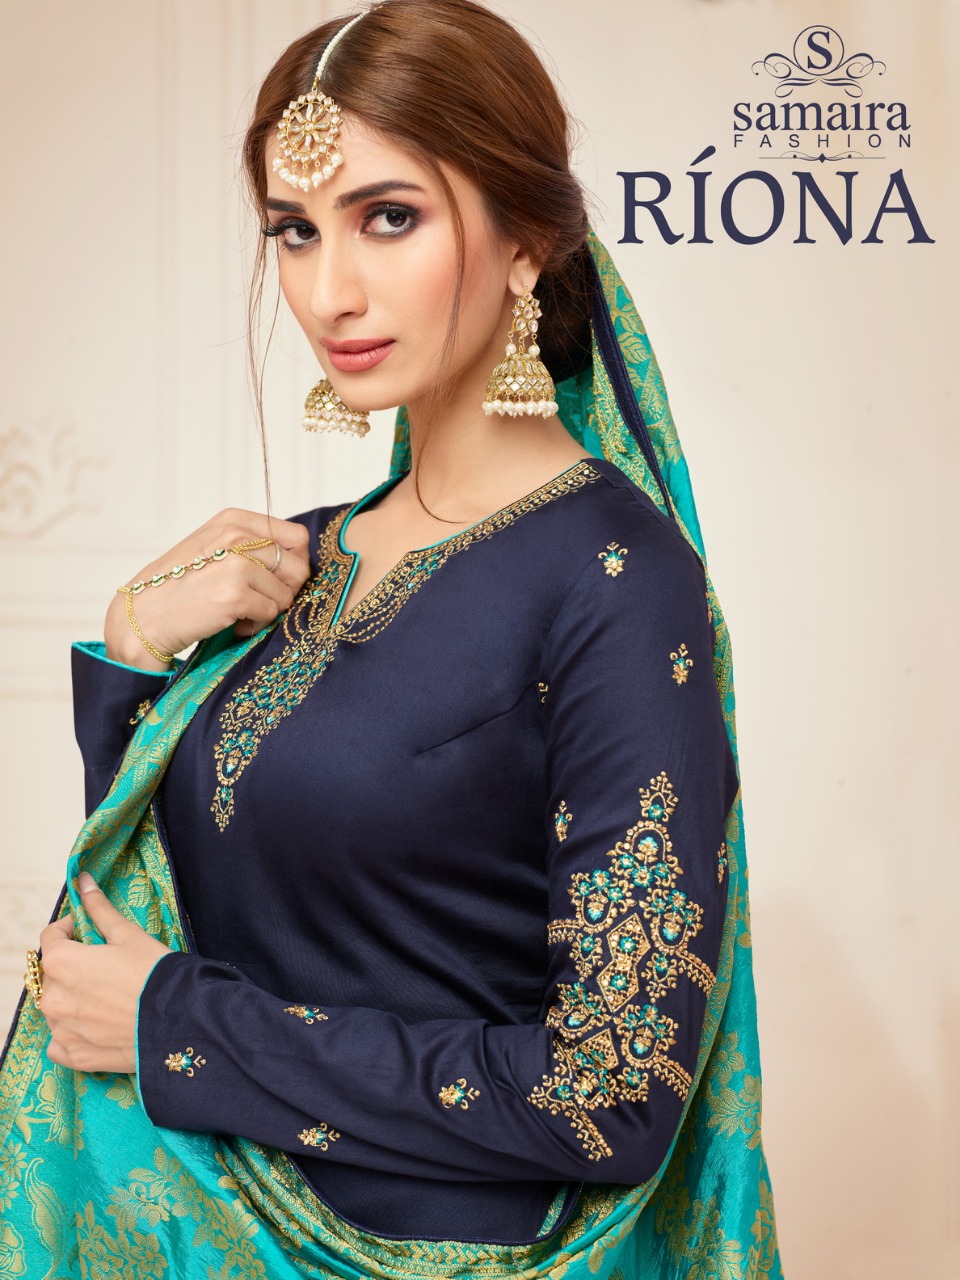 Samaira fashion riona jam cotton embroidery suit banarasi dupatta collection